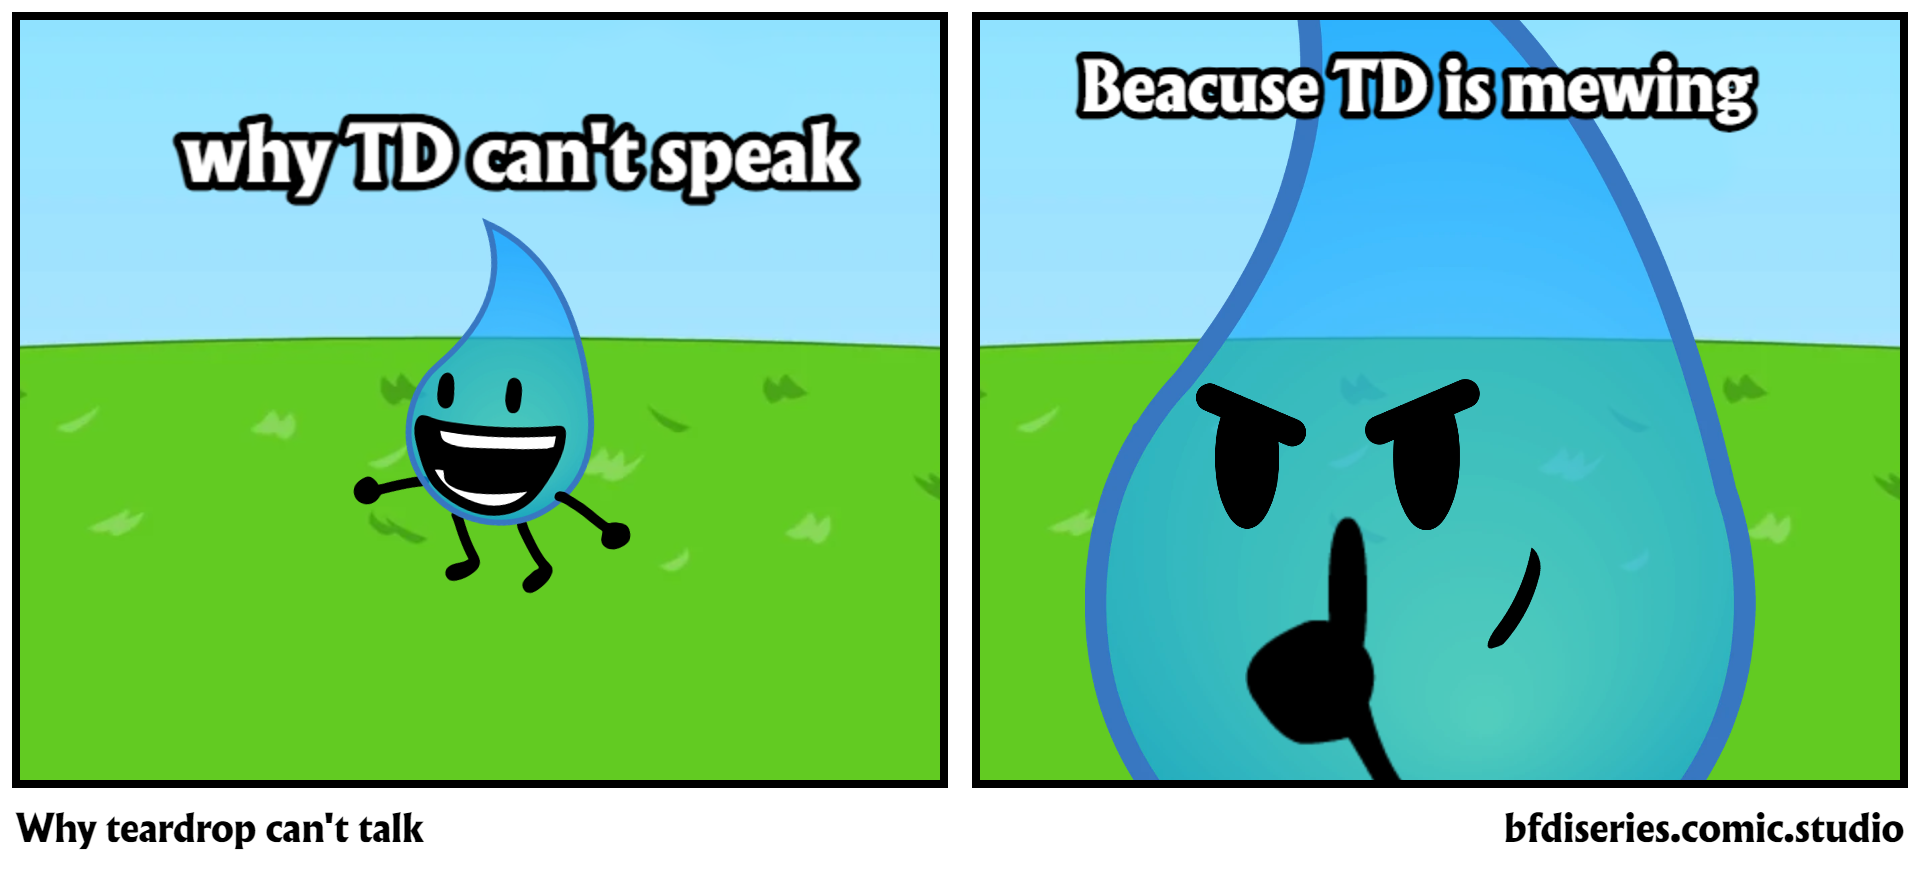 Why teardrop can't talk